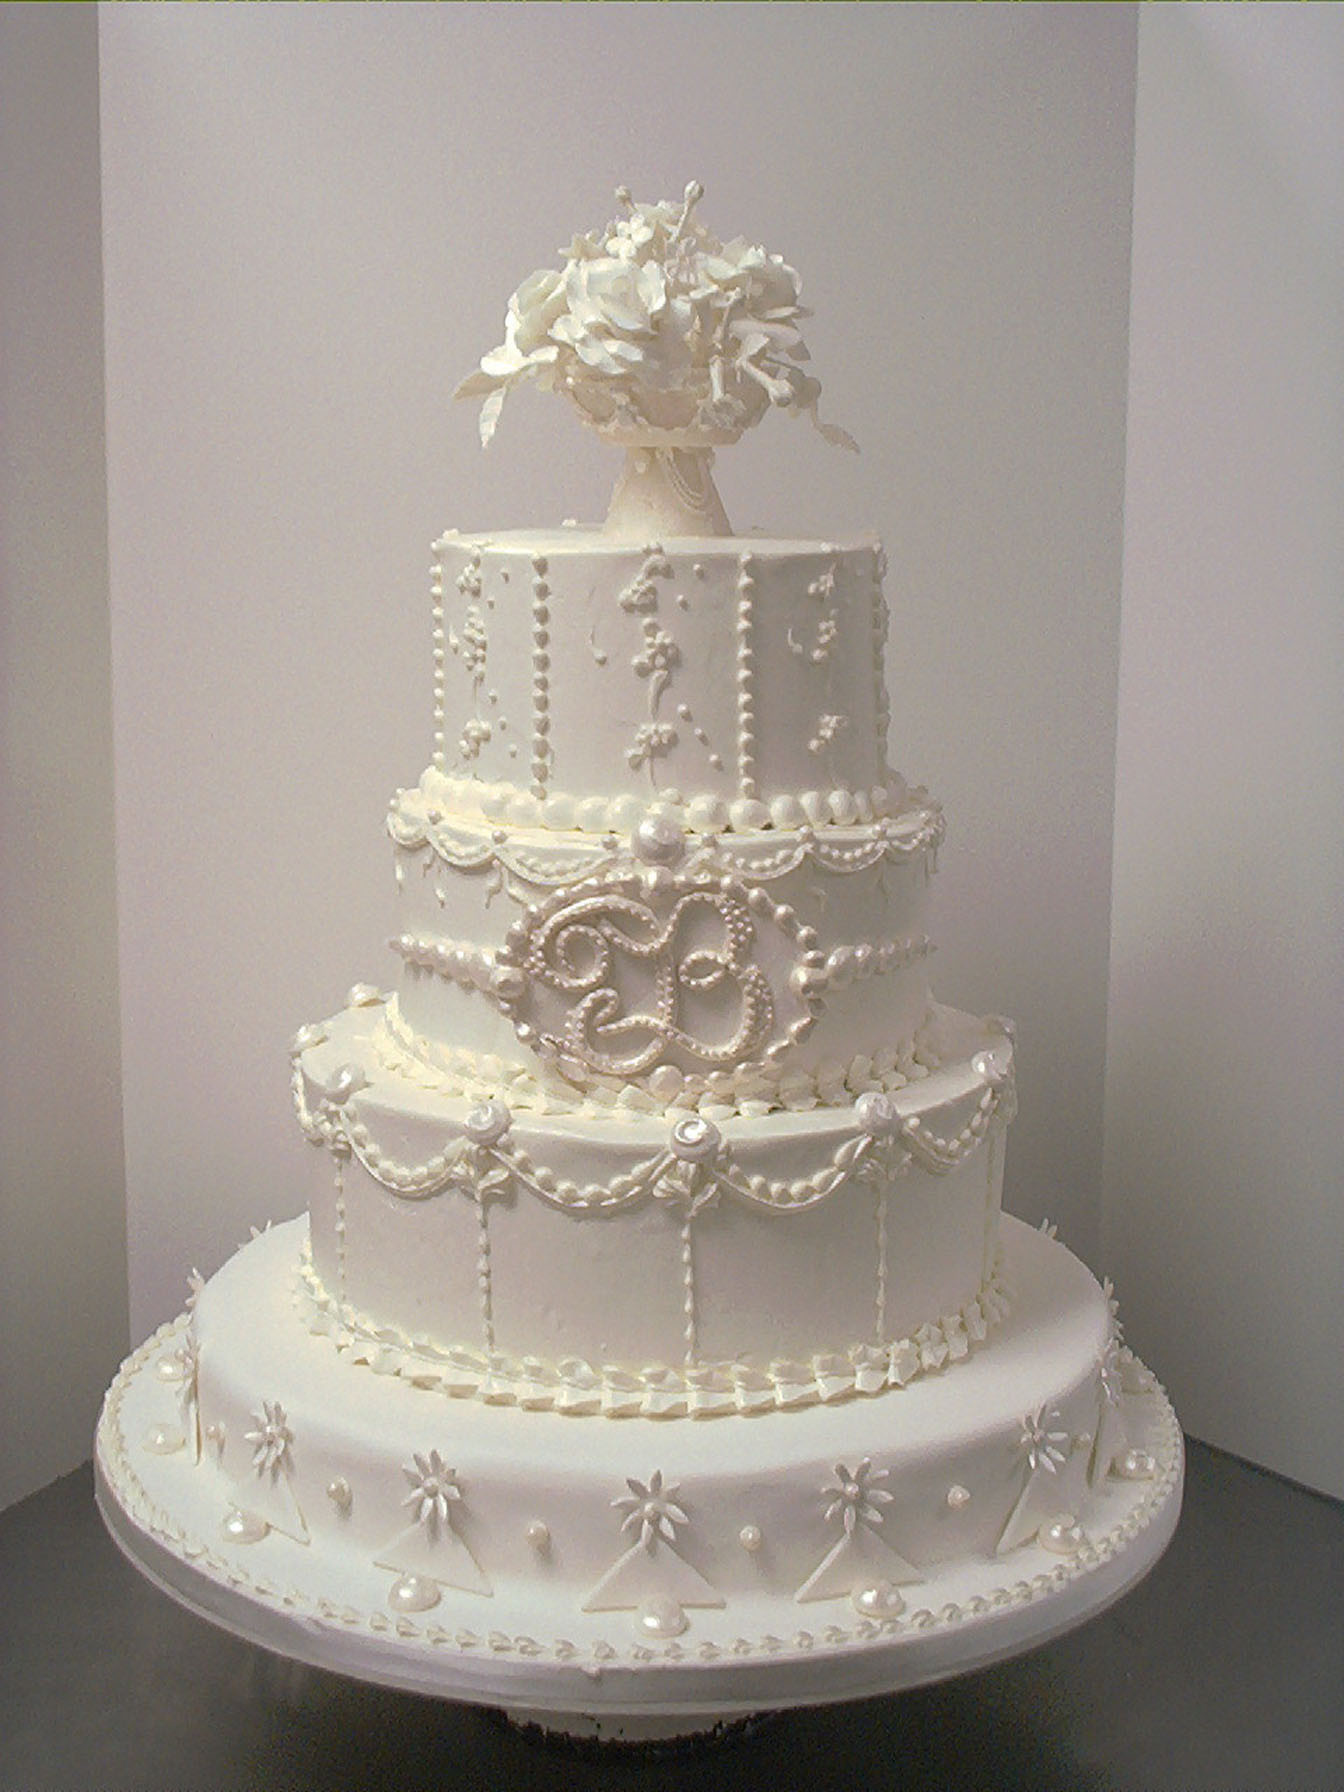 Beautiful Wedding Cakes
 10 Beautiful Wedding Cakes We Love